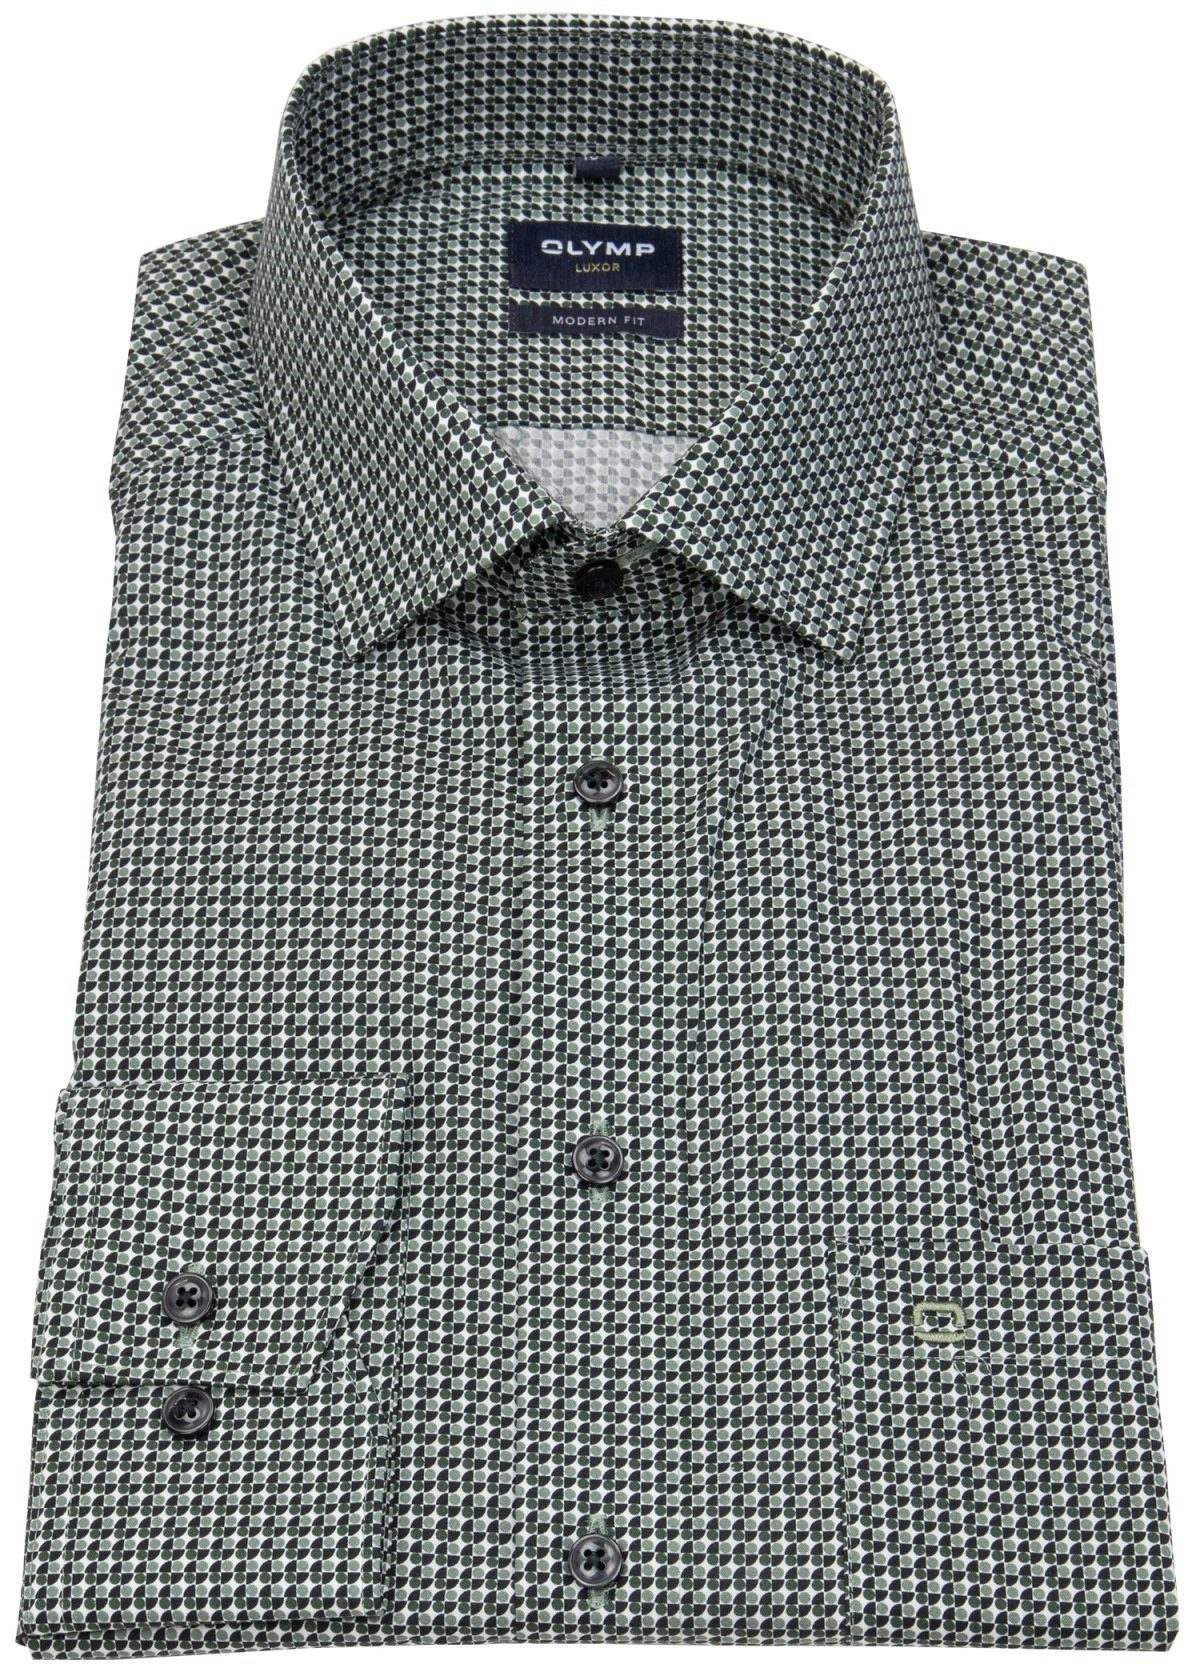 OLYMP Langarmhemd Modern Fit leicht tailliert bügelfrei Kentkragen oliv | Hemden